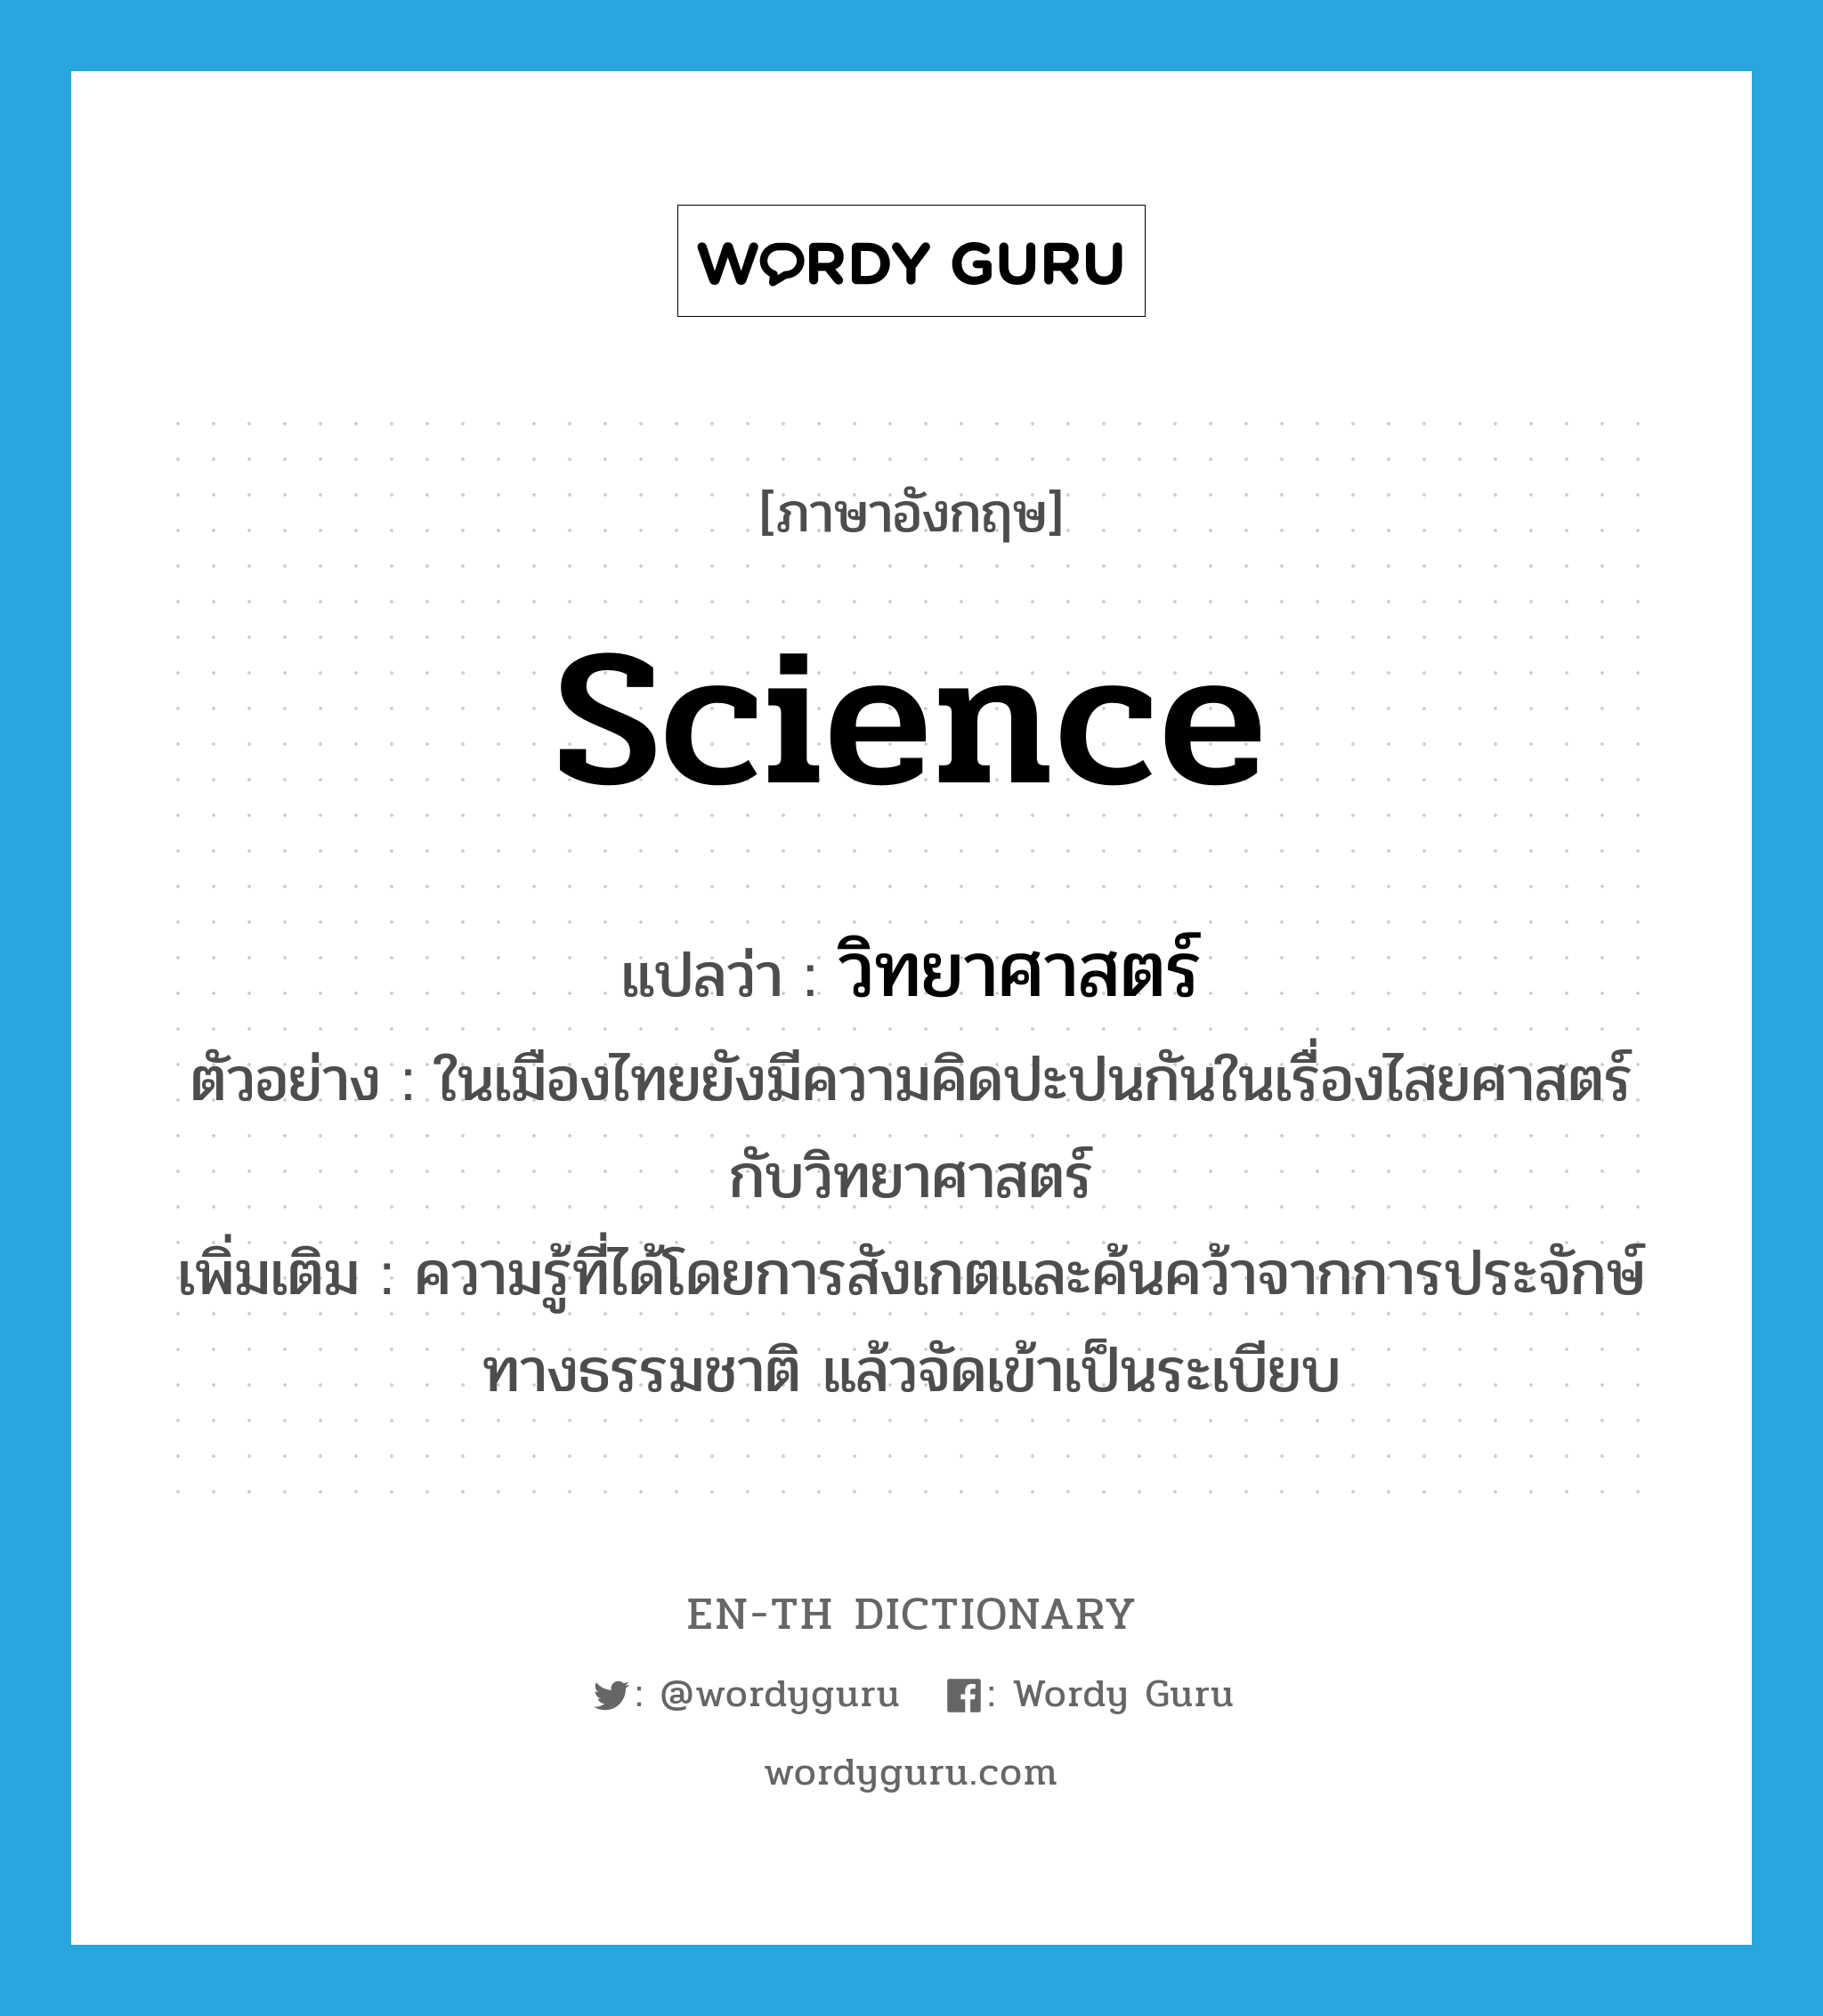 science แปลว่า?, คำศัพท์ภาษาอังกฤษ science แปลว่า วิทยาศาสตร์ ประเภท N ตัวอย่าง ในเมืองไทยยังมีความคิดปะปนกันในเรื่องไสยศาสตร์กับวิทยาศาสตร์ เพิ่มเติม ความรู้ที่ได้โดยการสังเกตและค้นคว้าจากการประจักษ์ทางธรรมชาติ แล้วจัดเข้าเป็นระเบียบ หมวด N